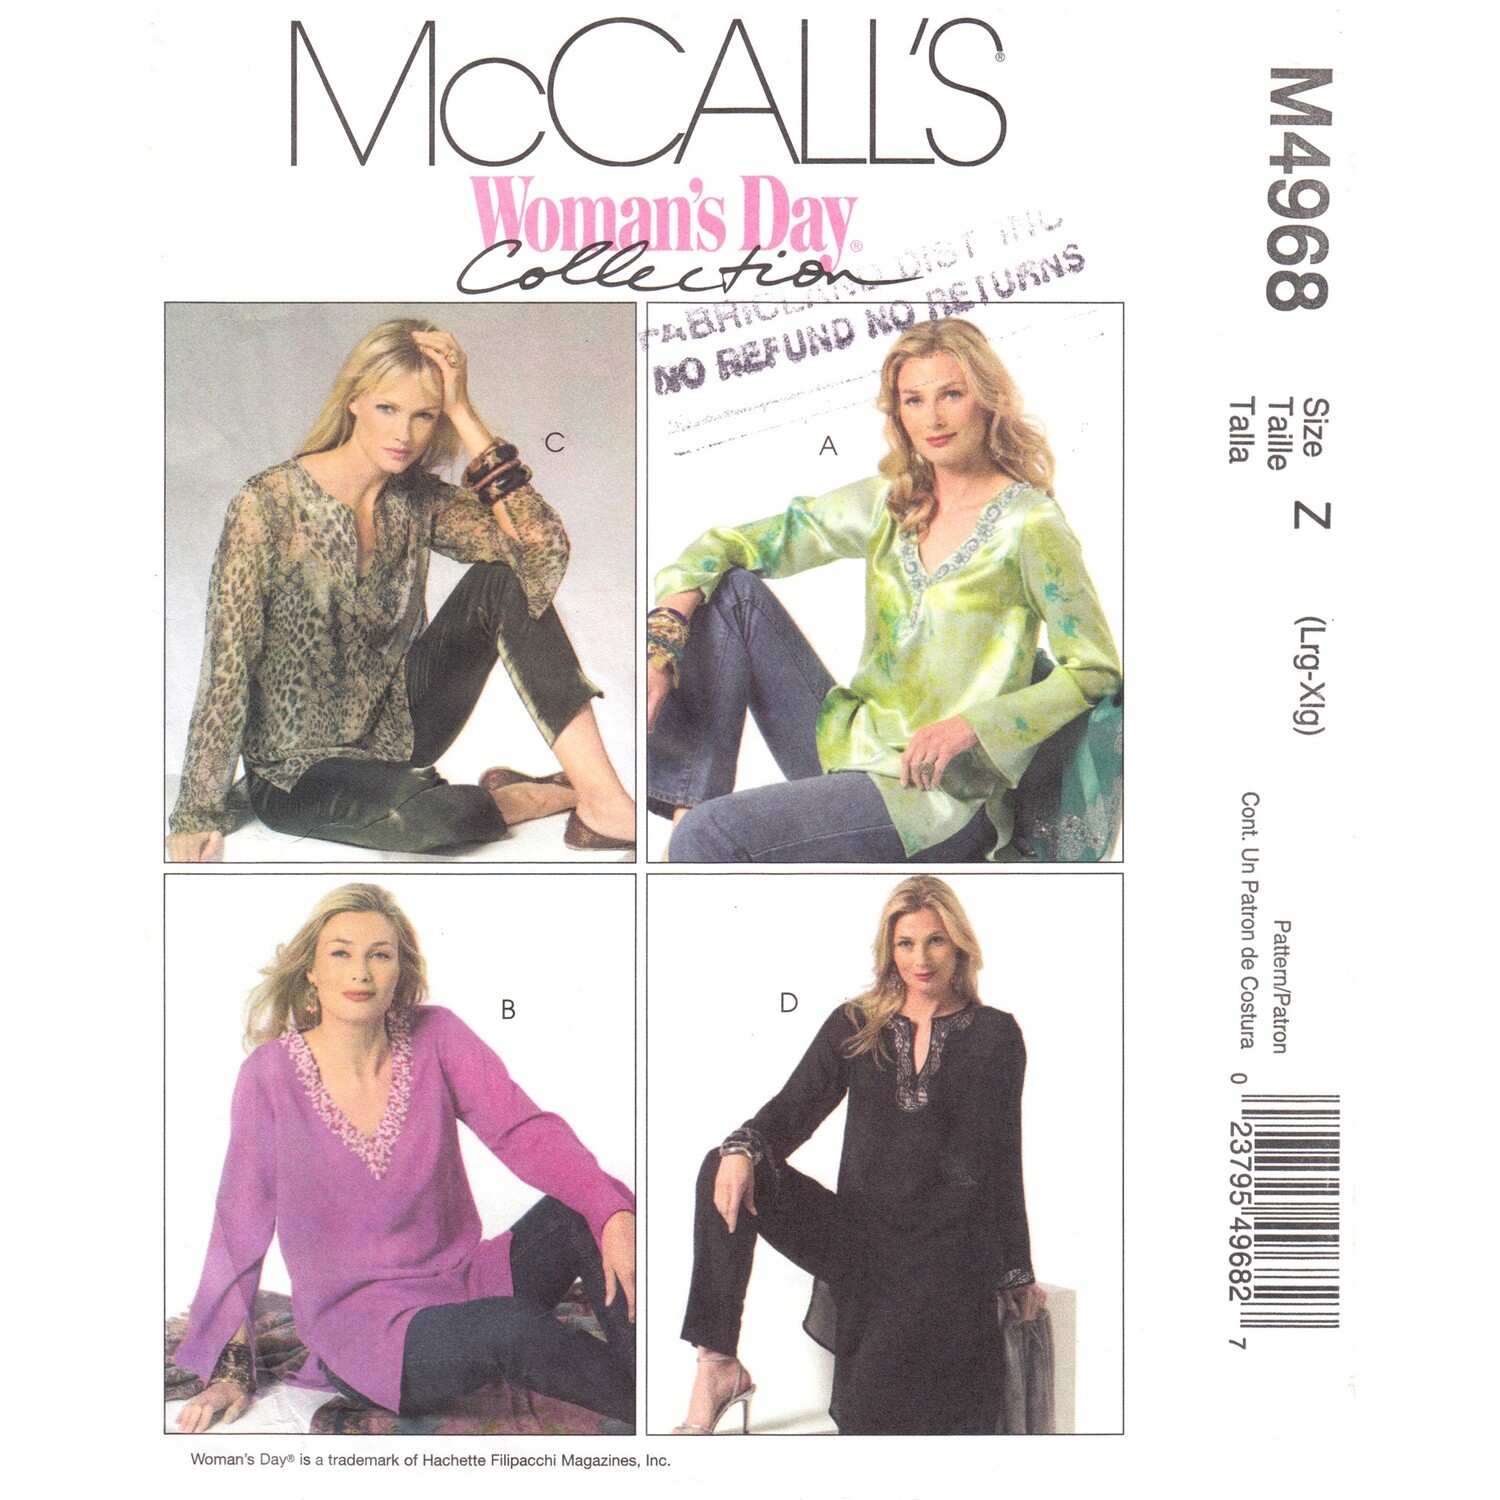 McCalls 4968 pattern